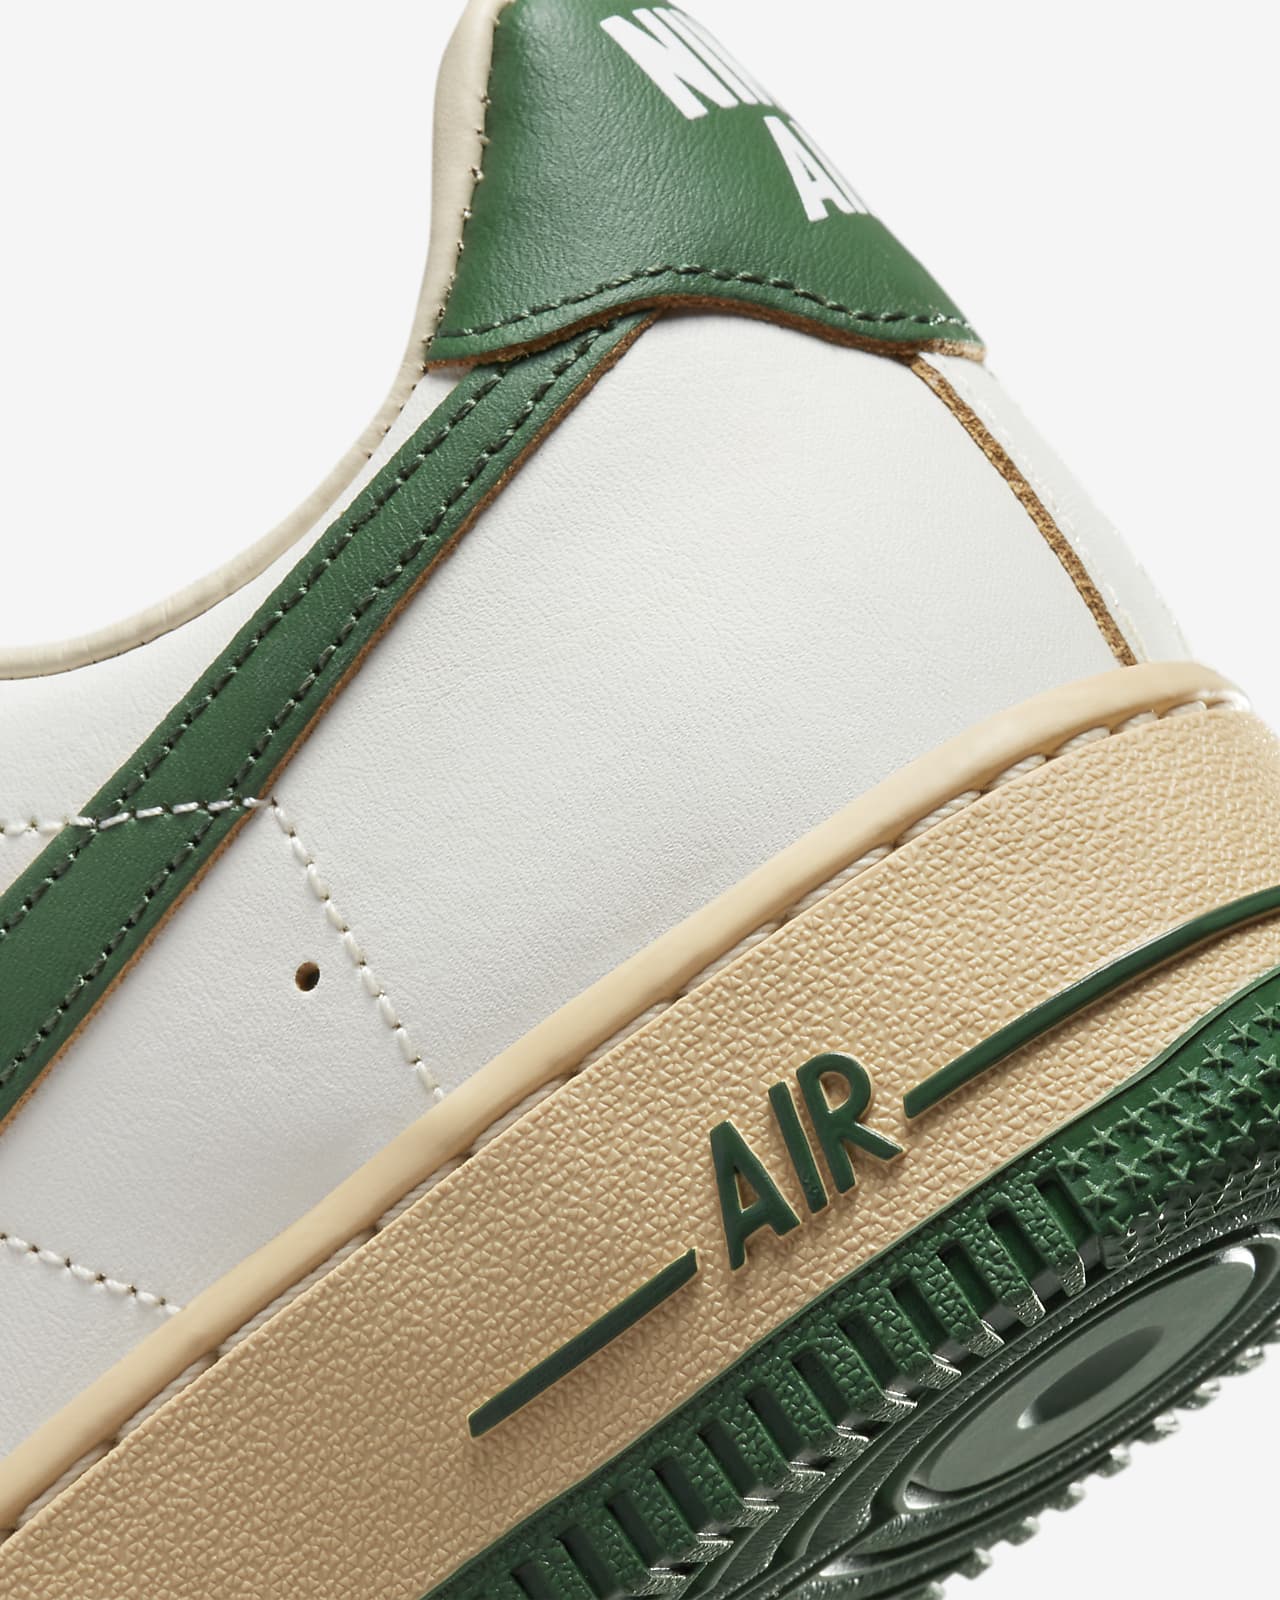 Nike Air Force 1 '07 LV8 Sneakers